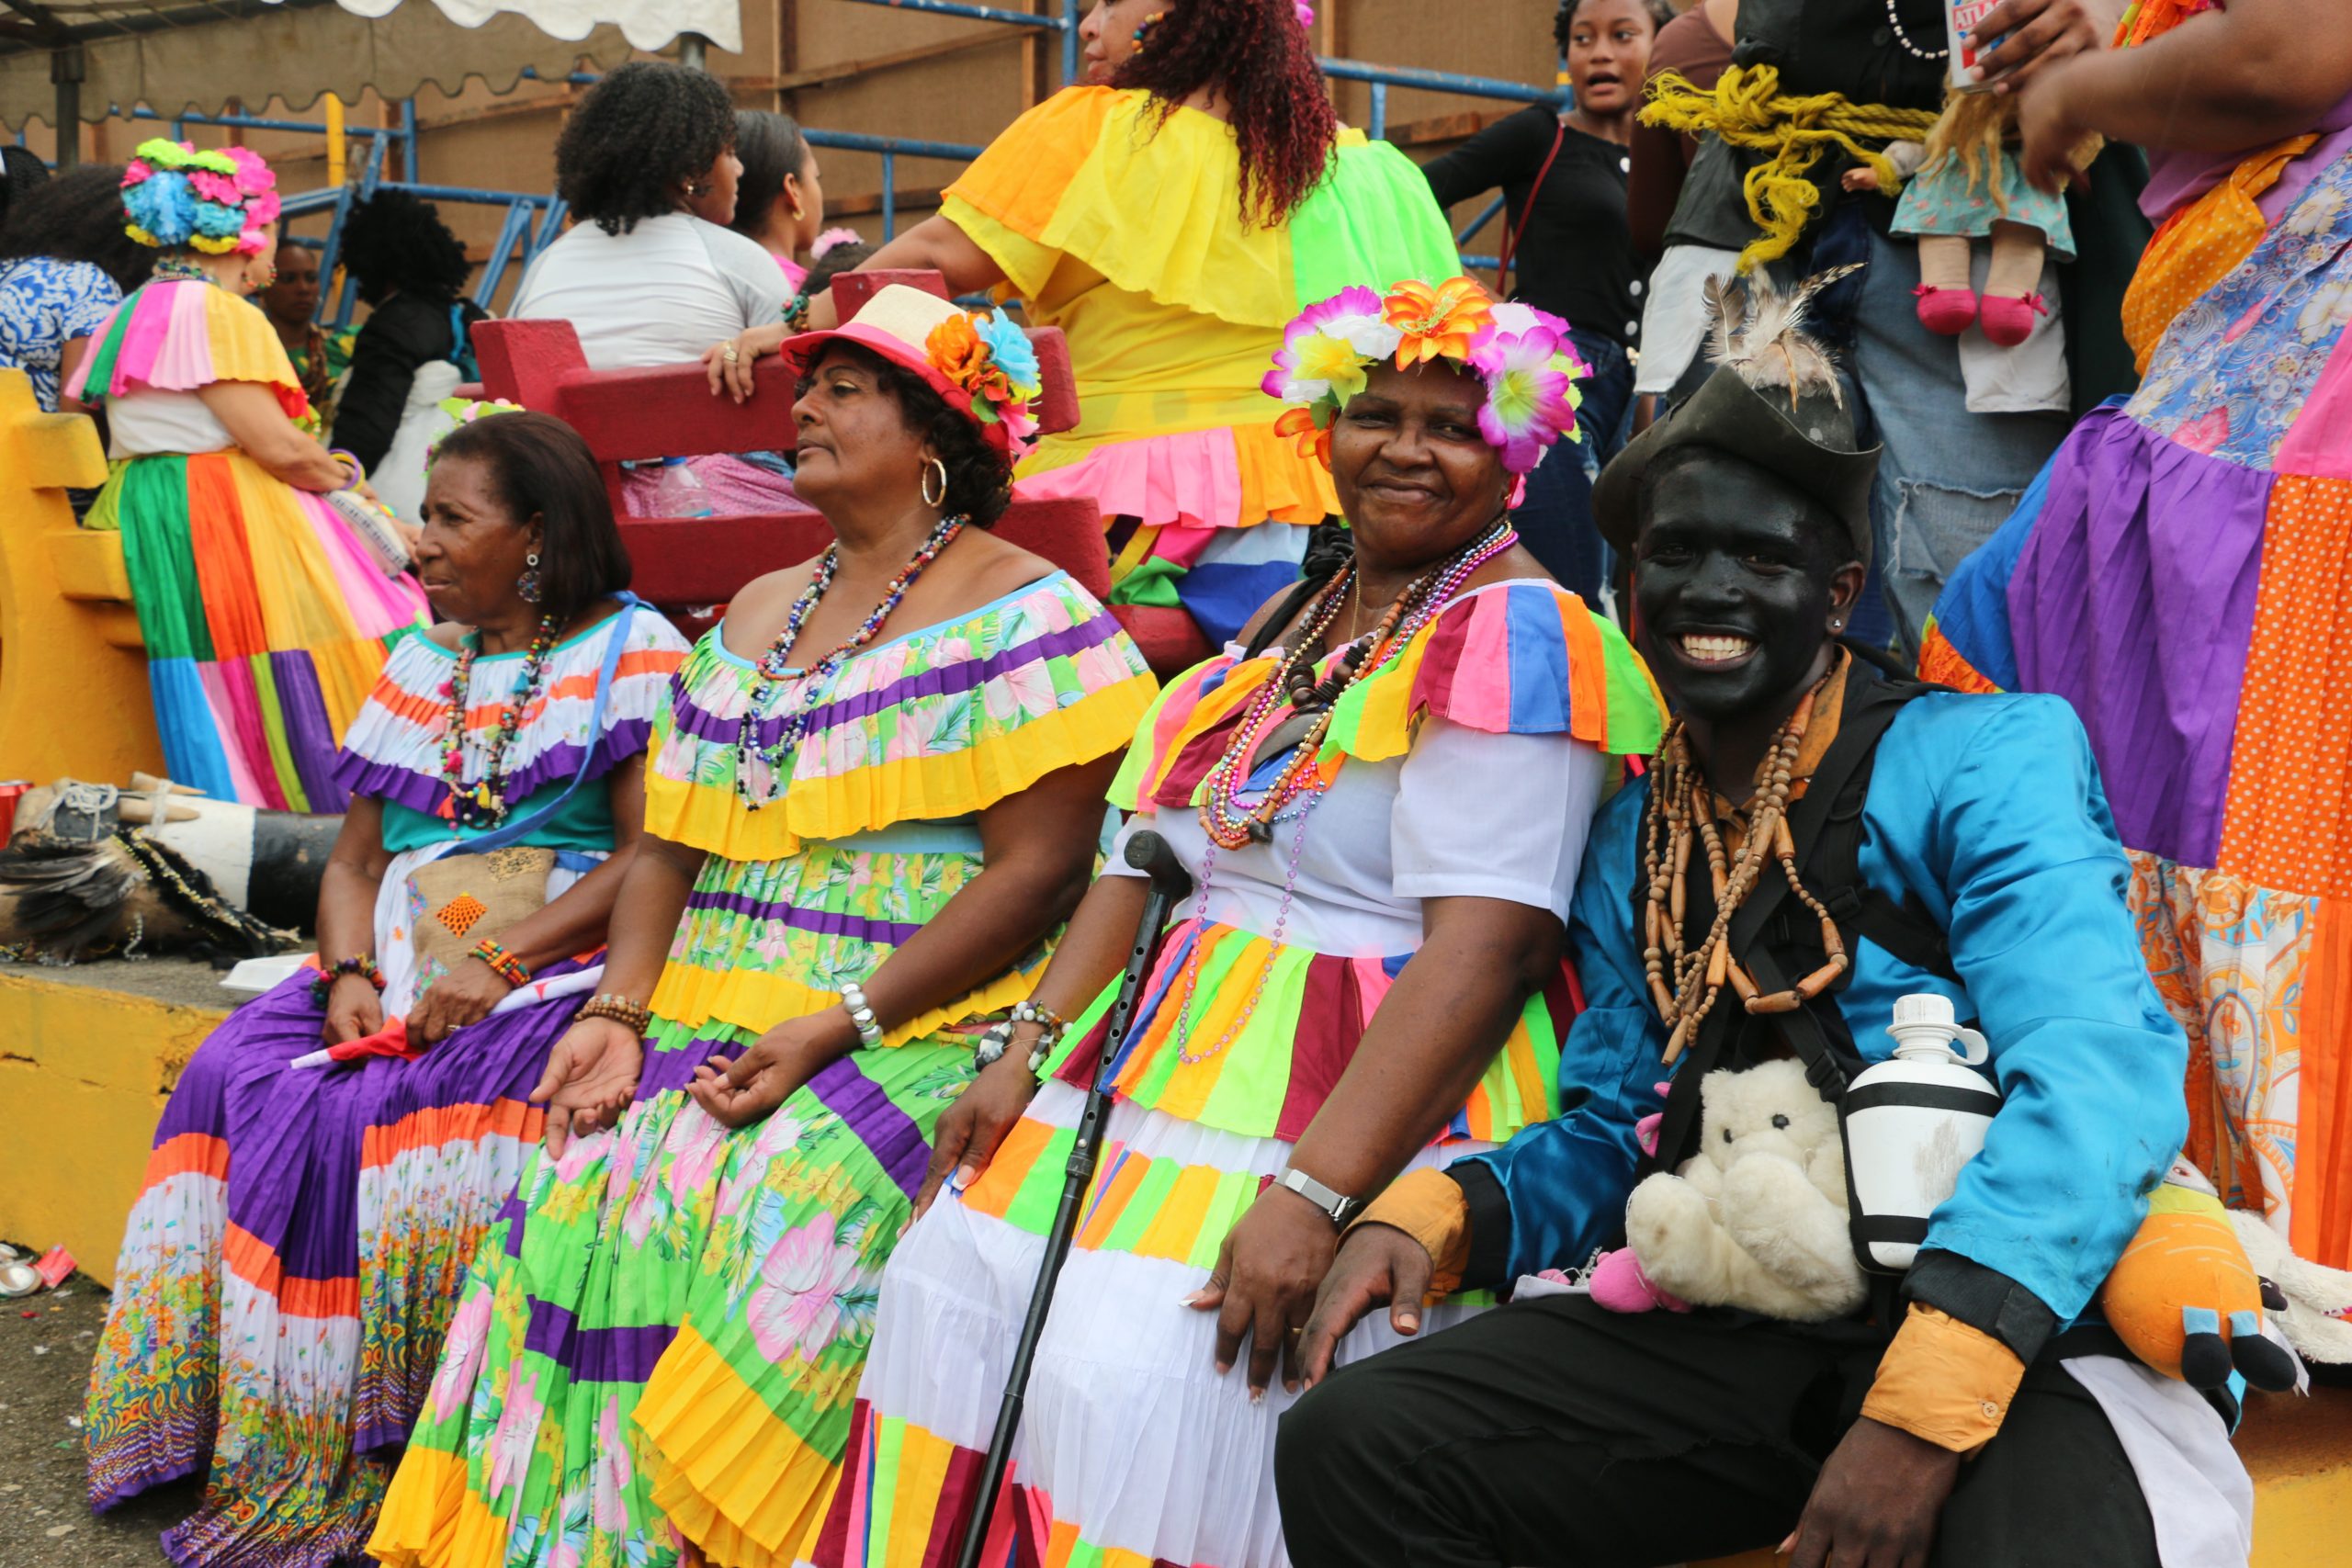 Resaltan en Panama la cultura afropanameña en el V Festival de la Pollera Congo